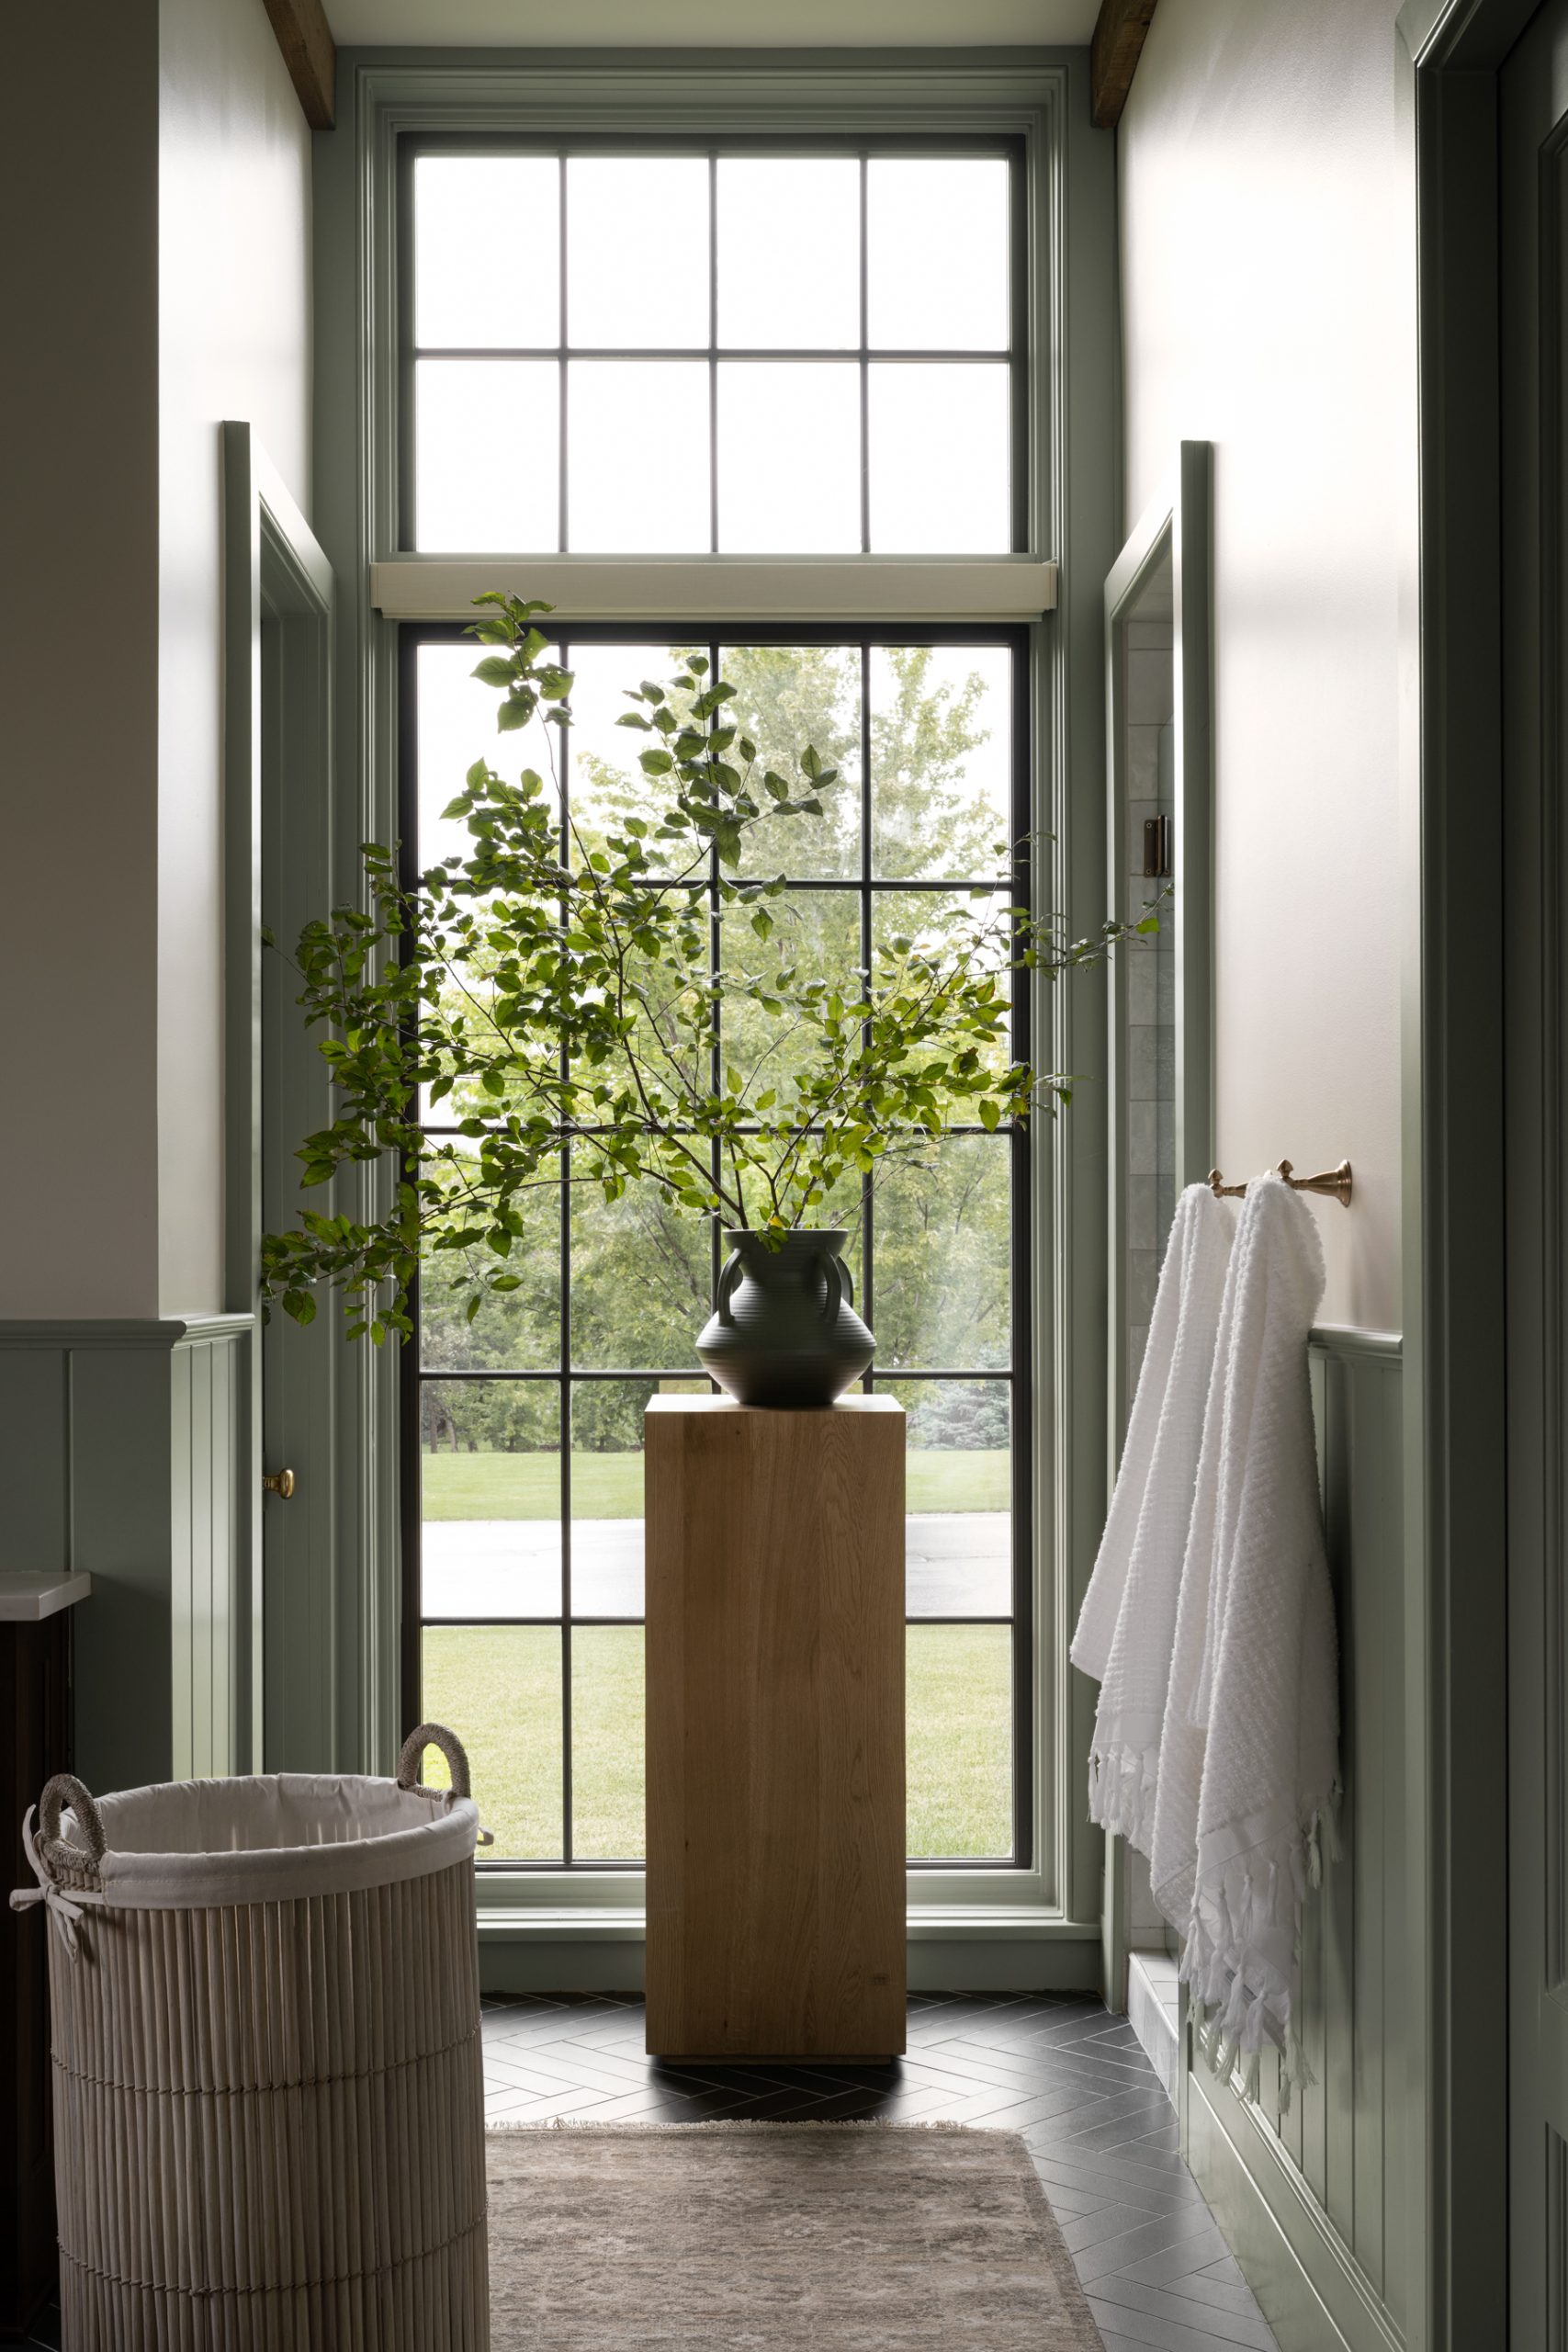 Wood pedestal in bathroom with windows